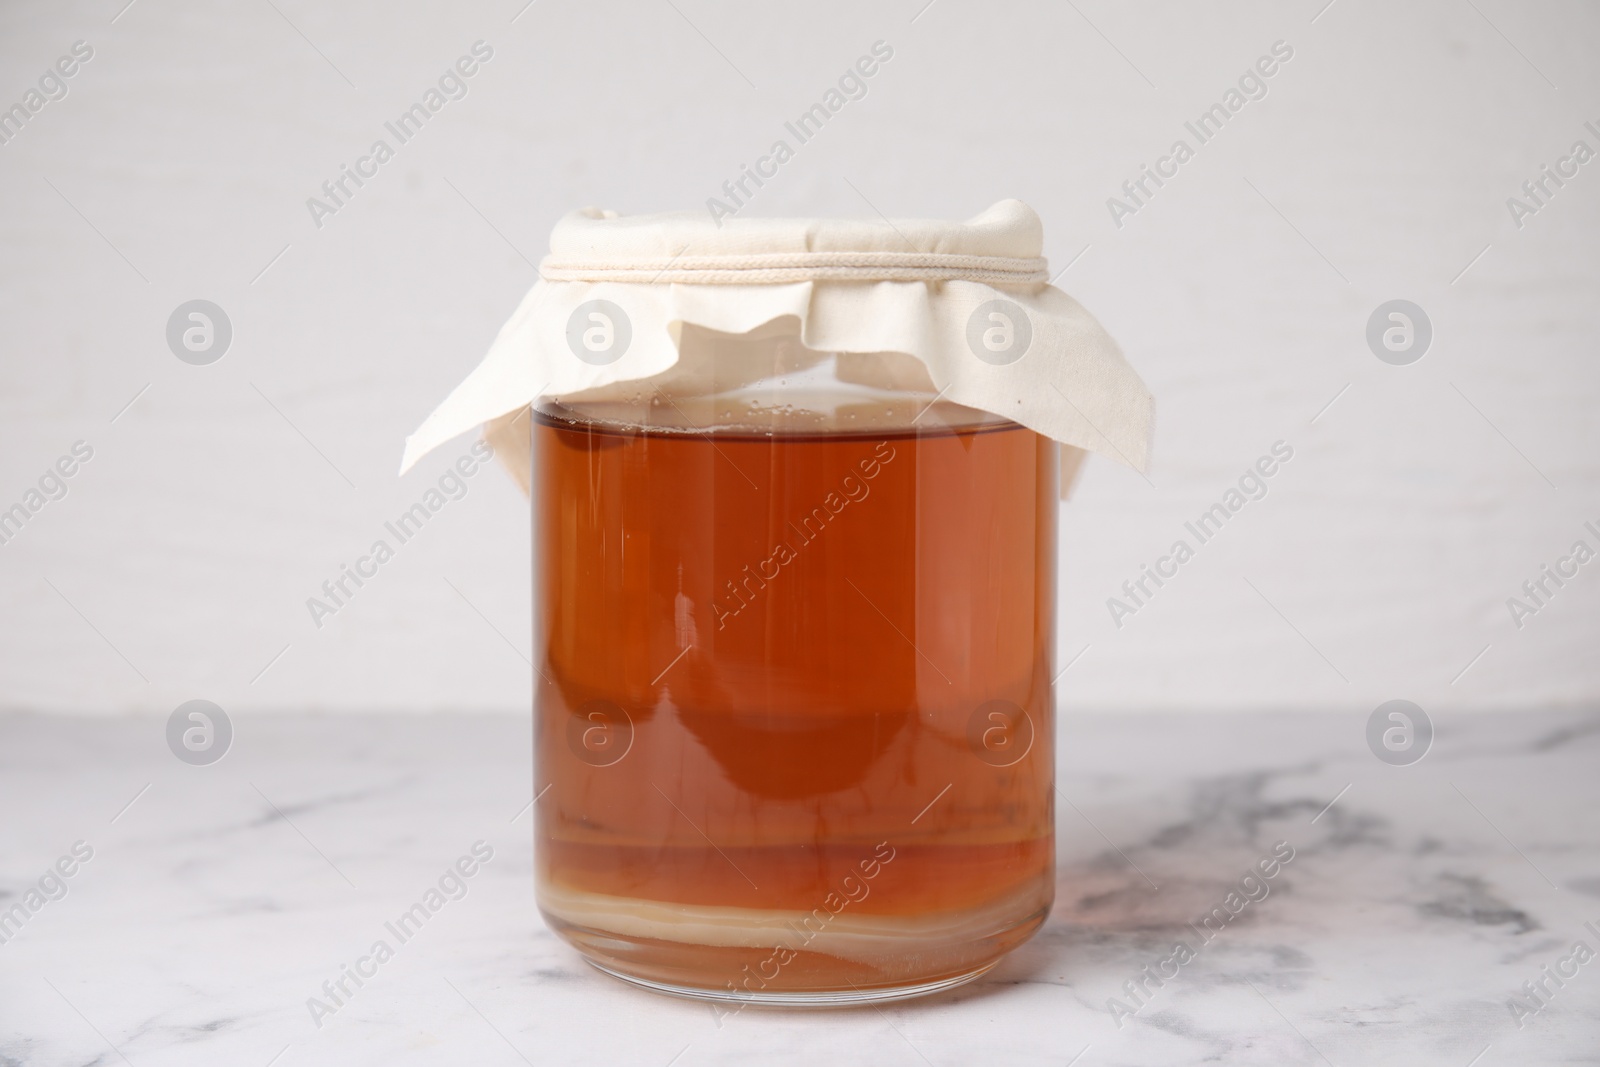 Photo of Tasty kombucha in glass jar on white marble table